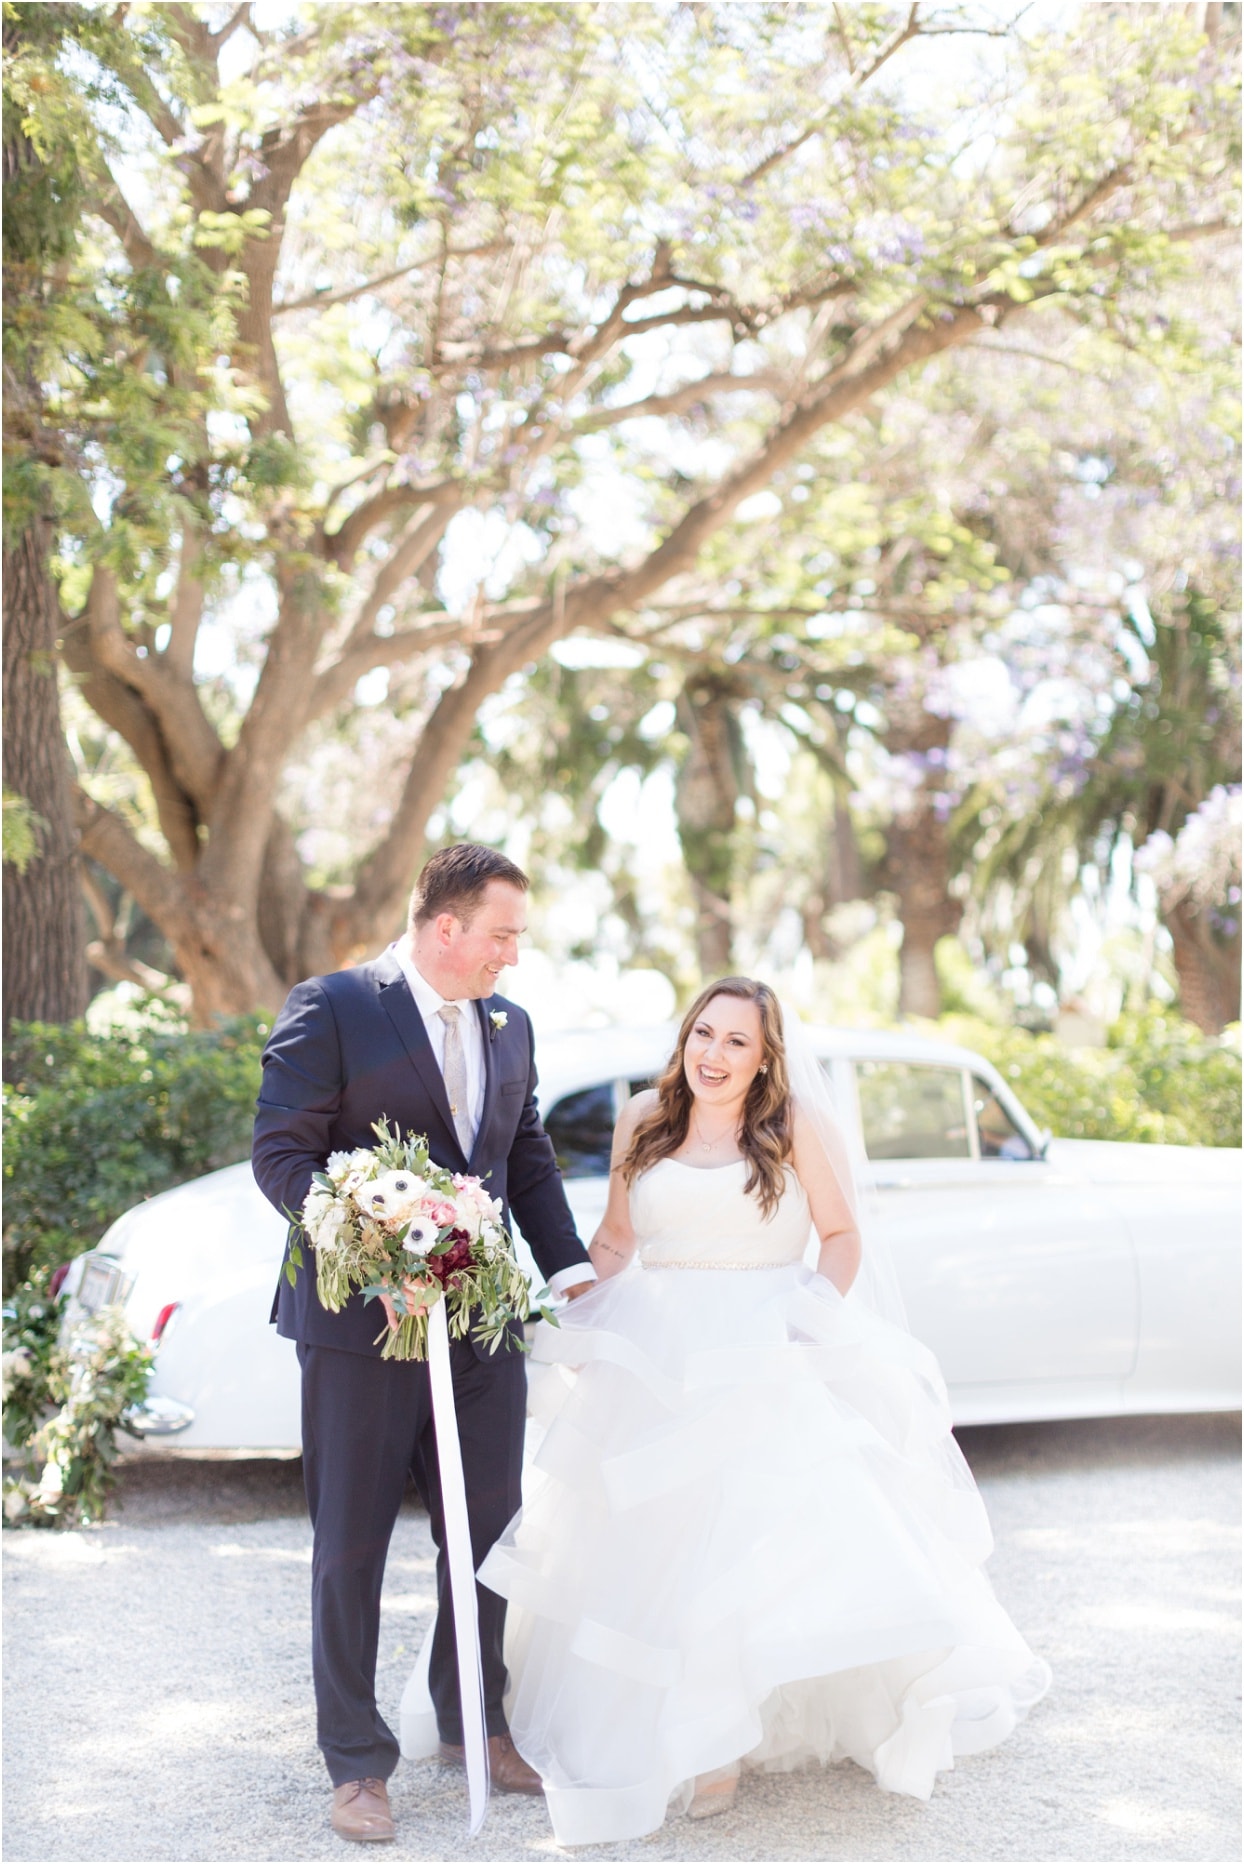 The Bench Wedding | McCormick Home Ranch Wedding | Southern California Wedding 